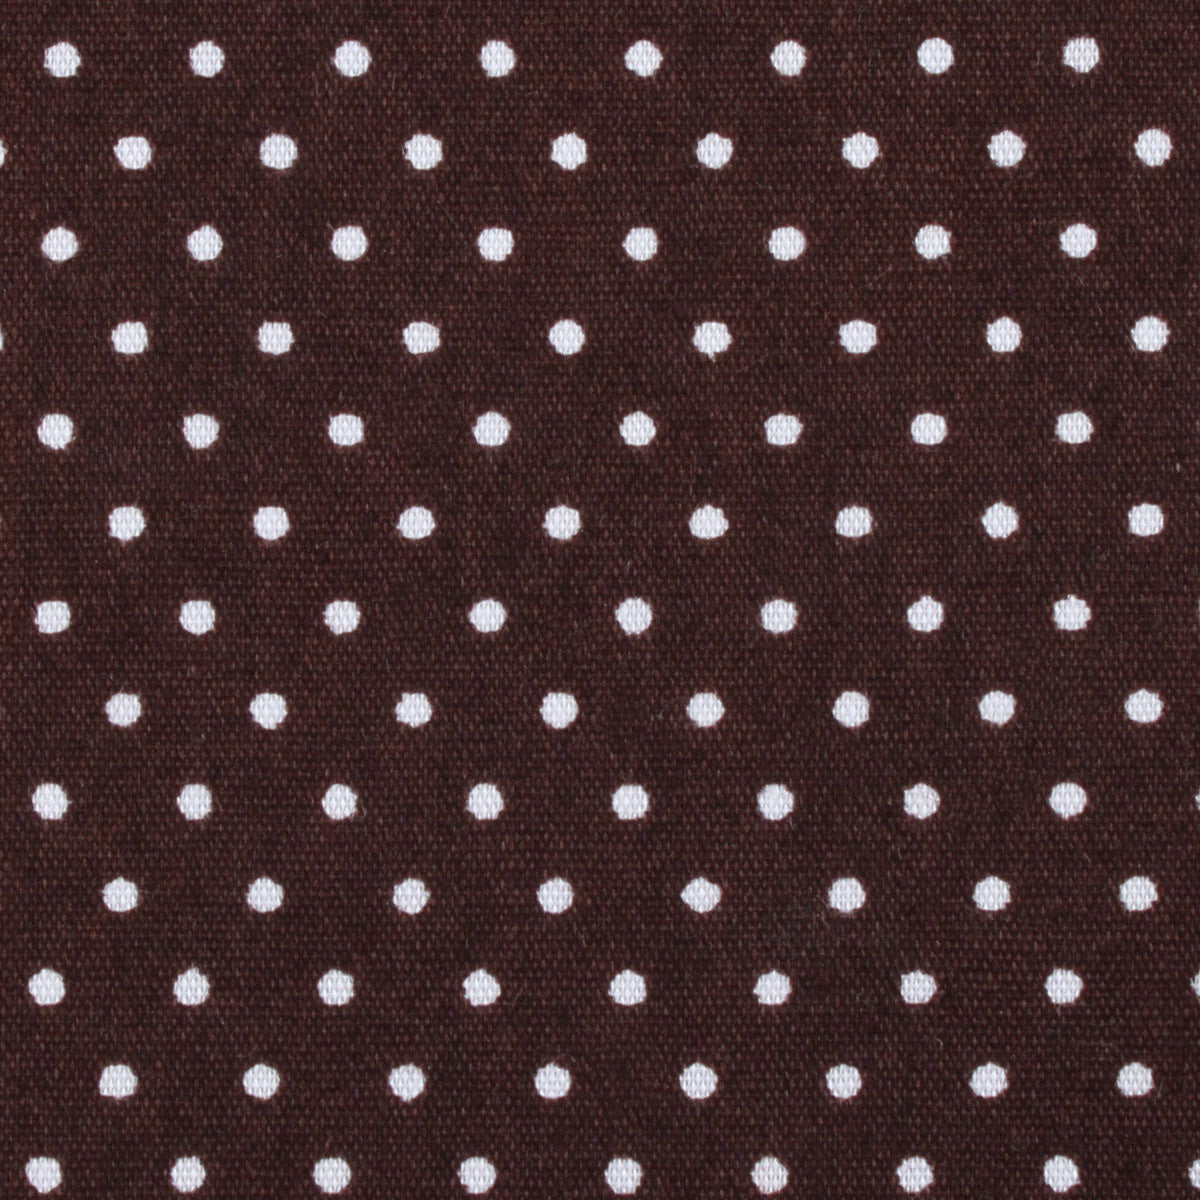 Lungo Brown Polkadot Cotton Fabric Pocket Square